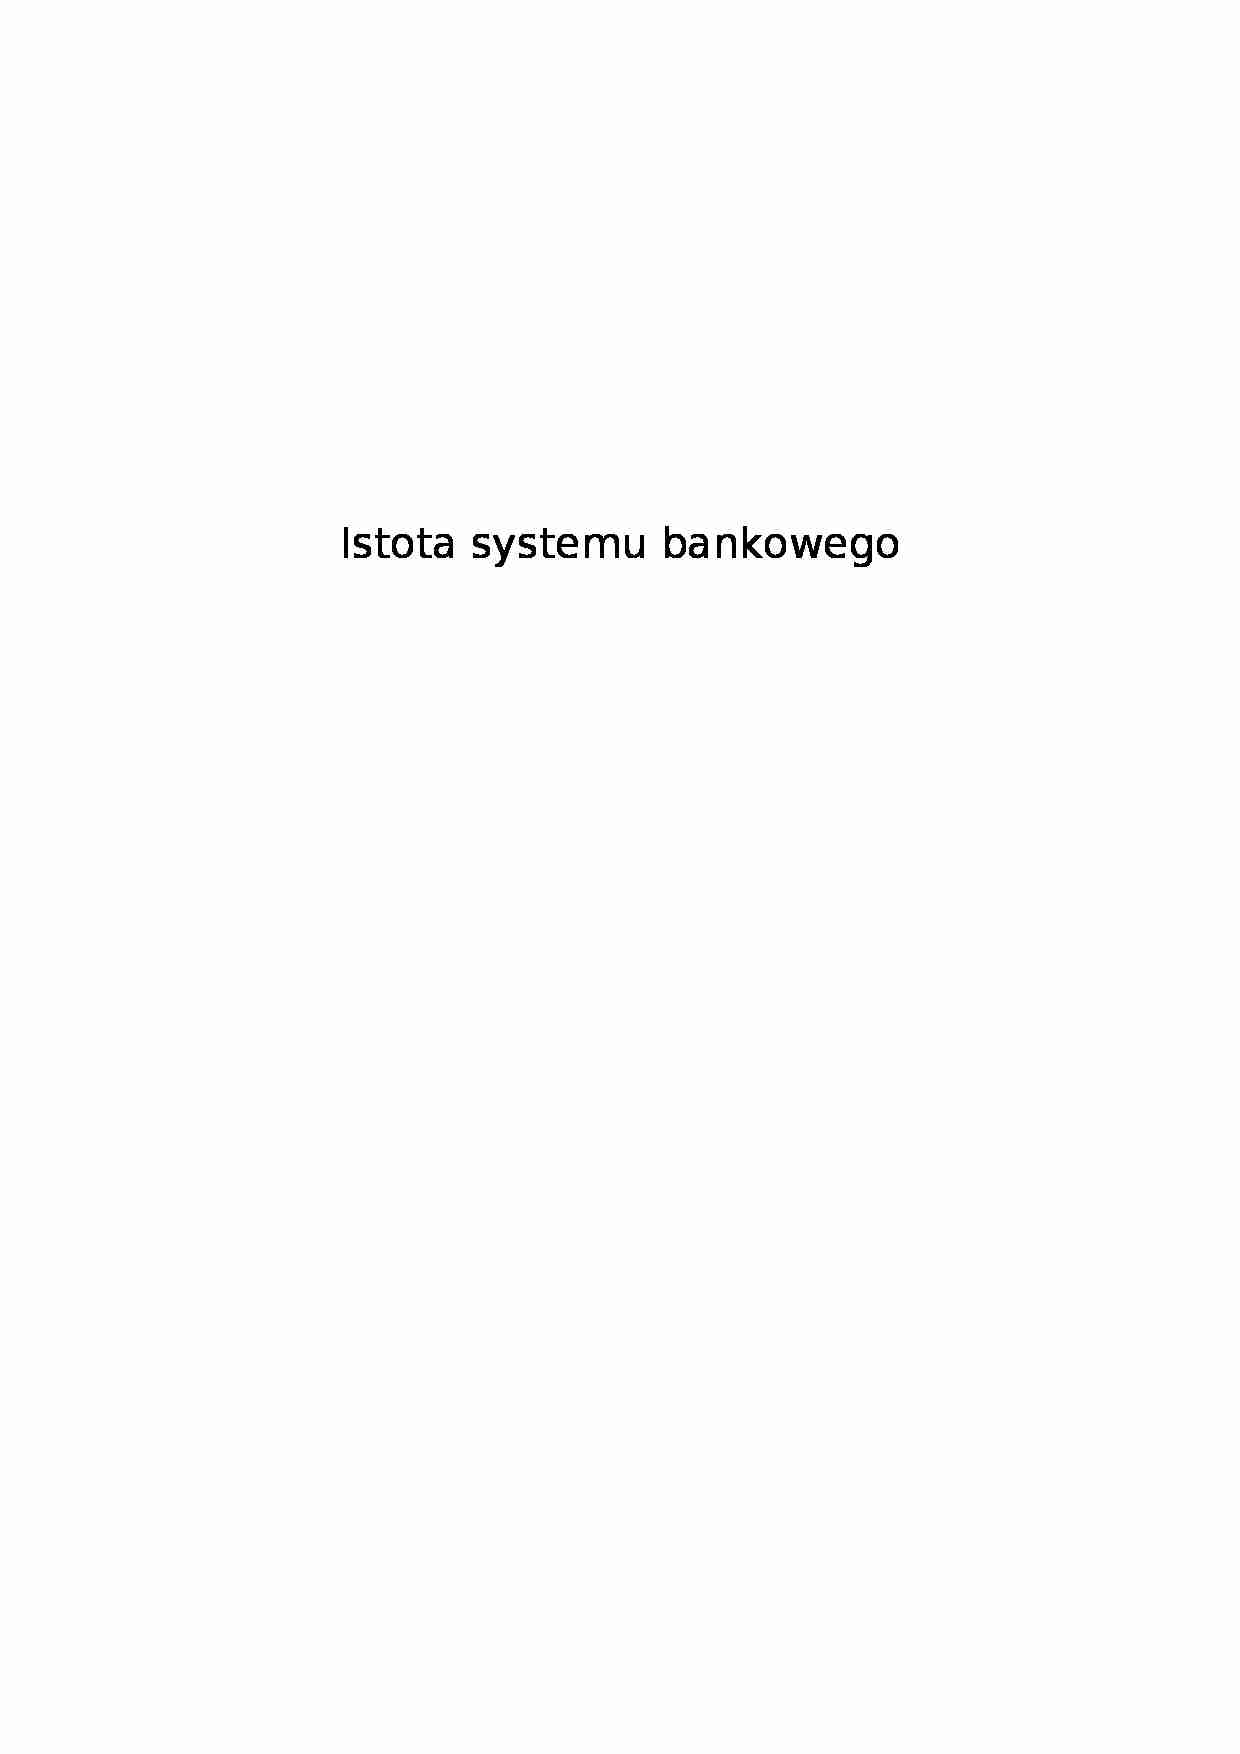 Istota systemu bankowego  - strona 1